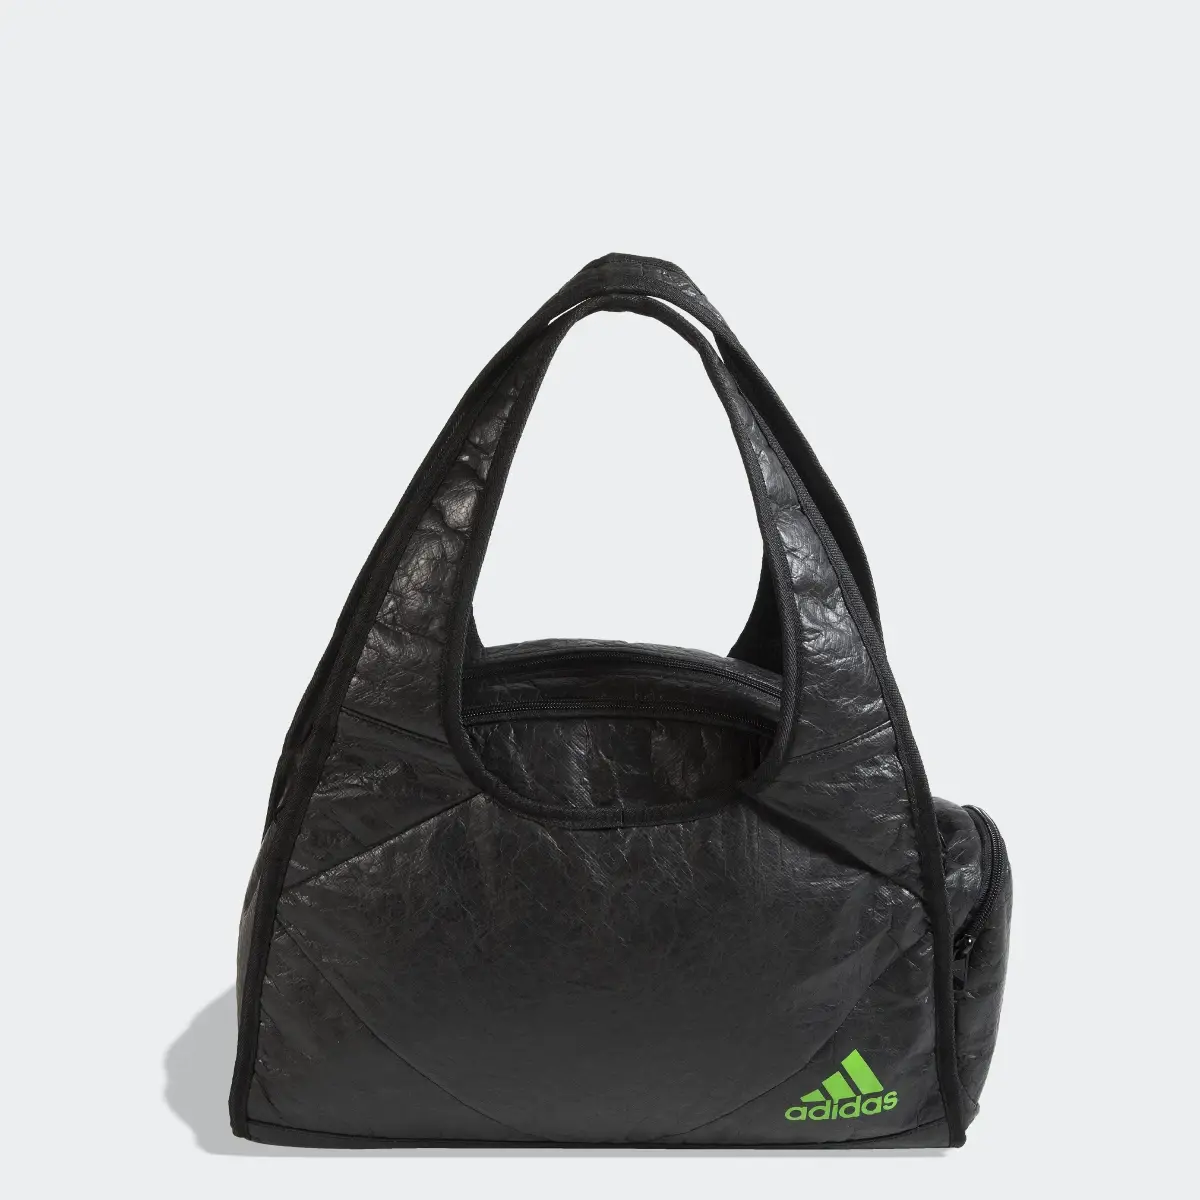 Adidas Weekend Bag 2.0. 1